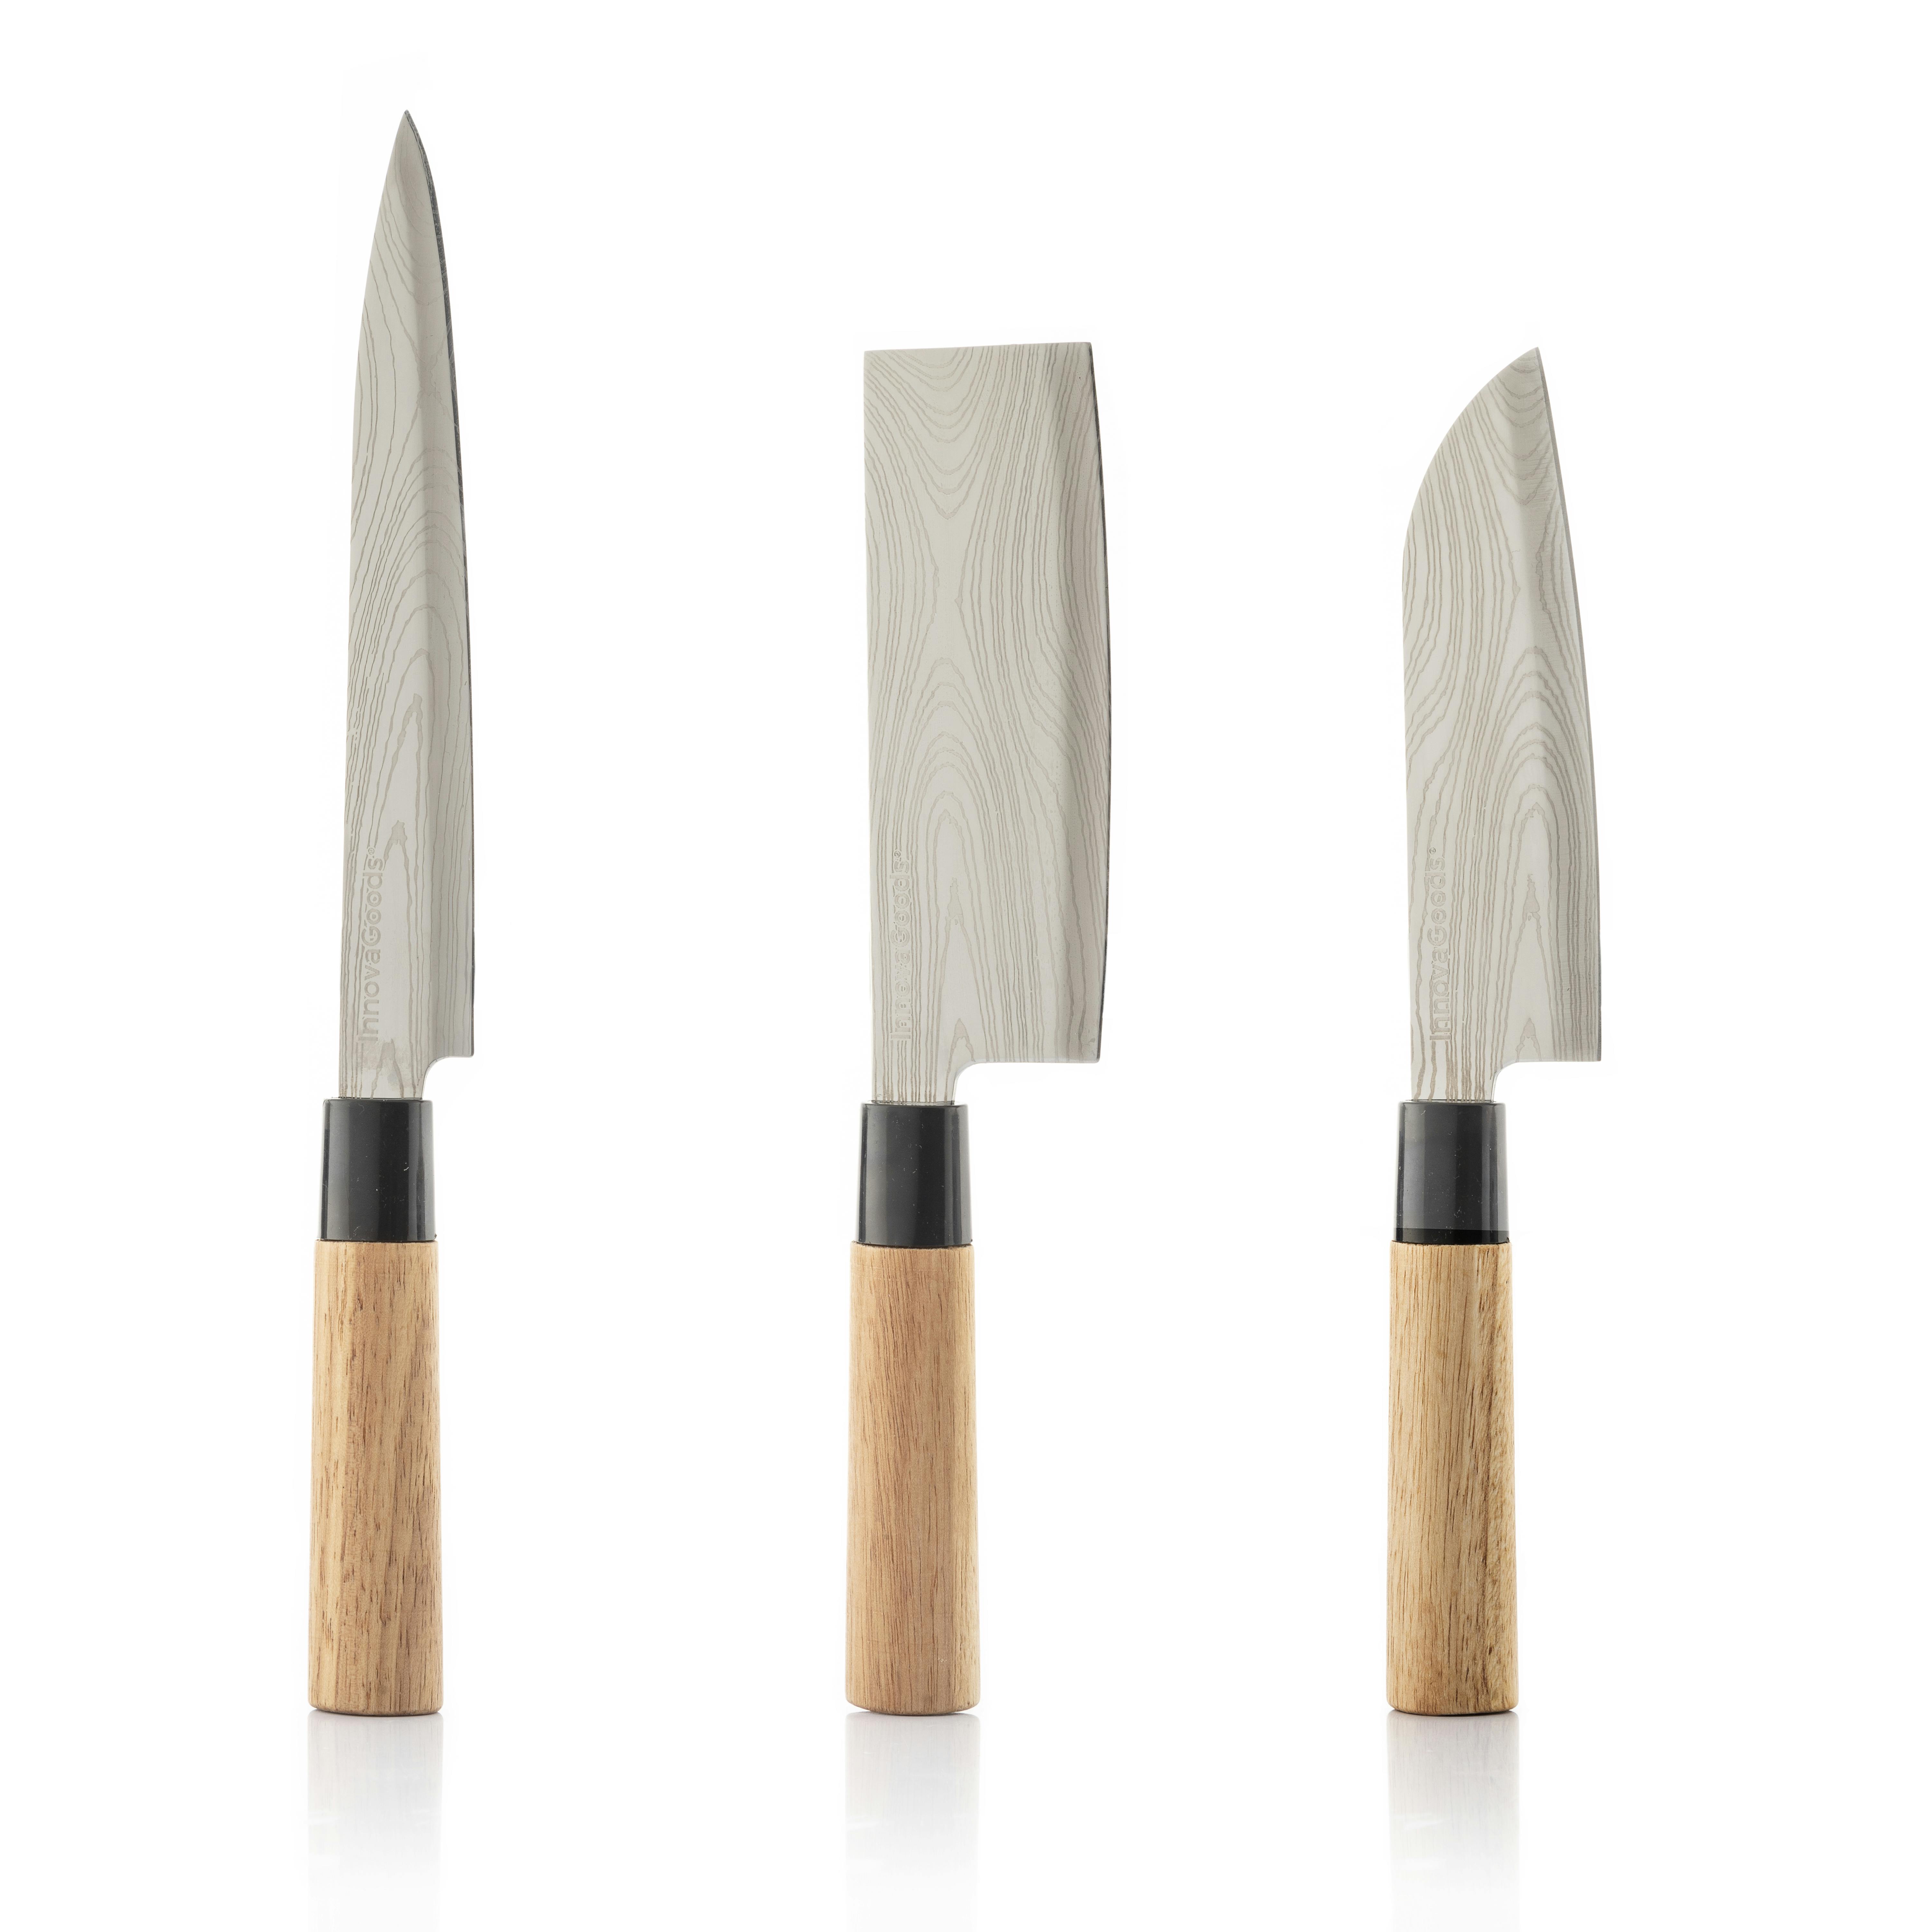 Cuchillos Swiss Chef Negros Set de 6 cuchillos profesionales